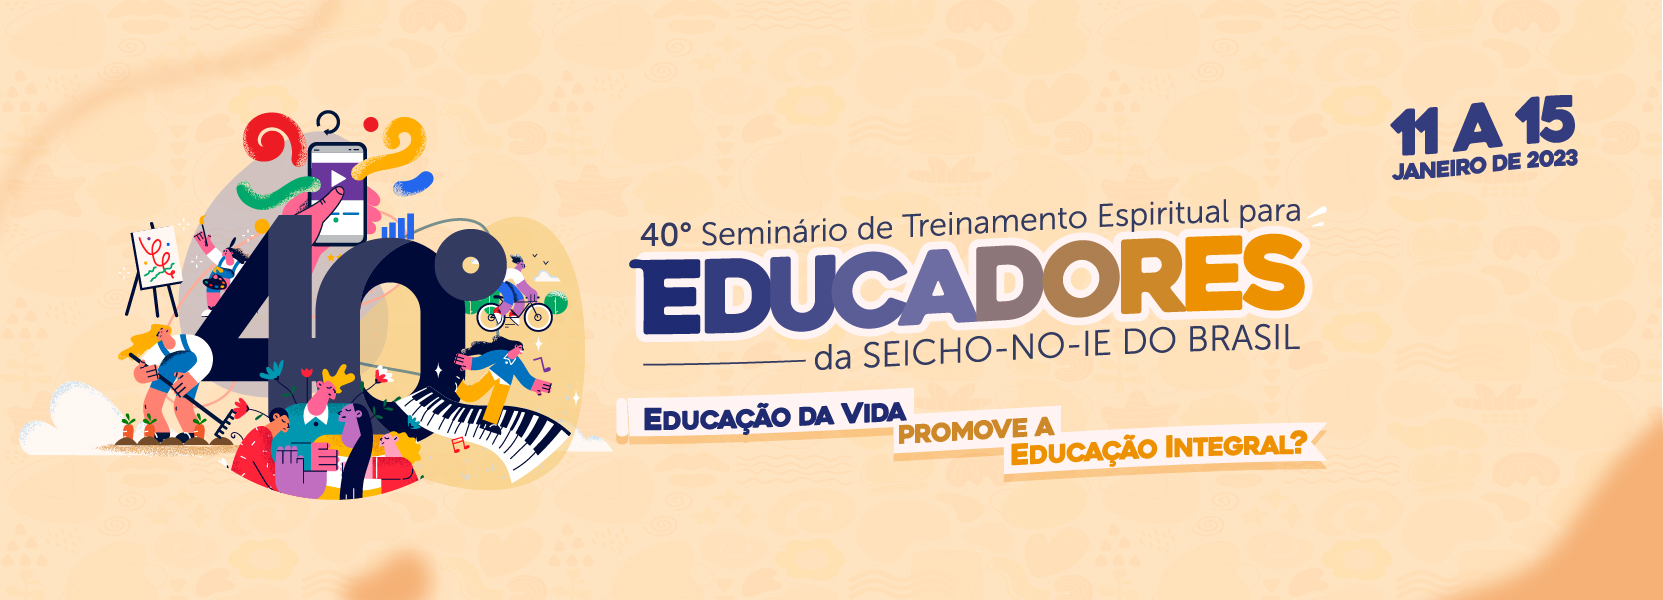 Seminario Educadores Topo portal educadores 40º Seminário de Educadores